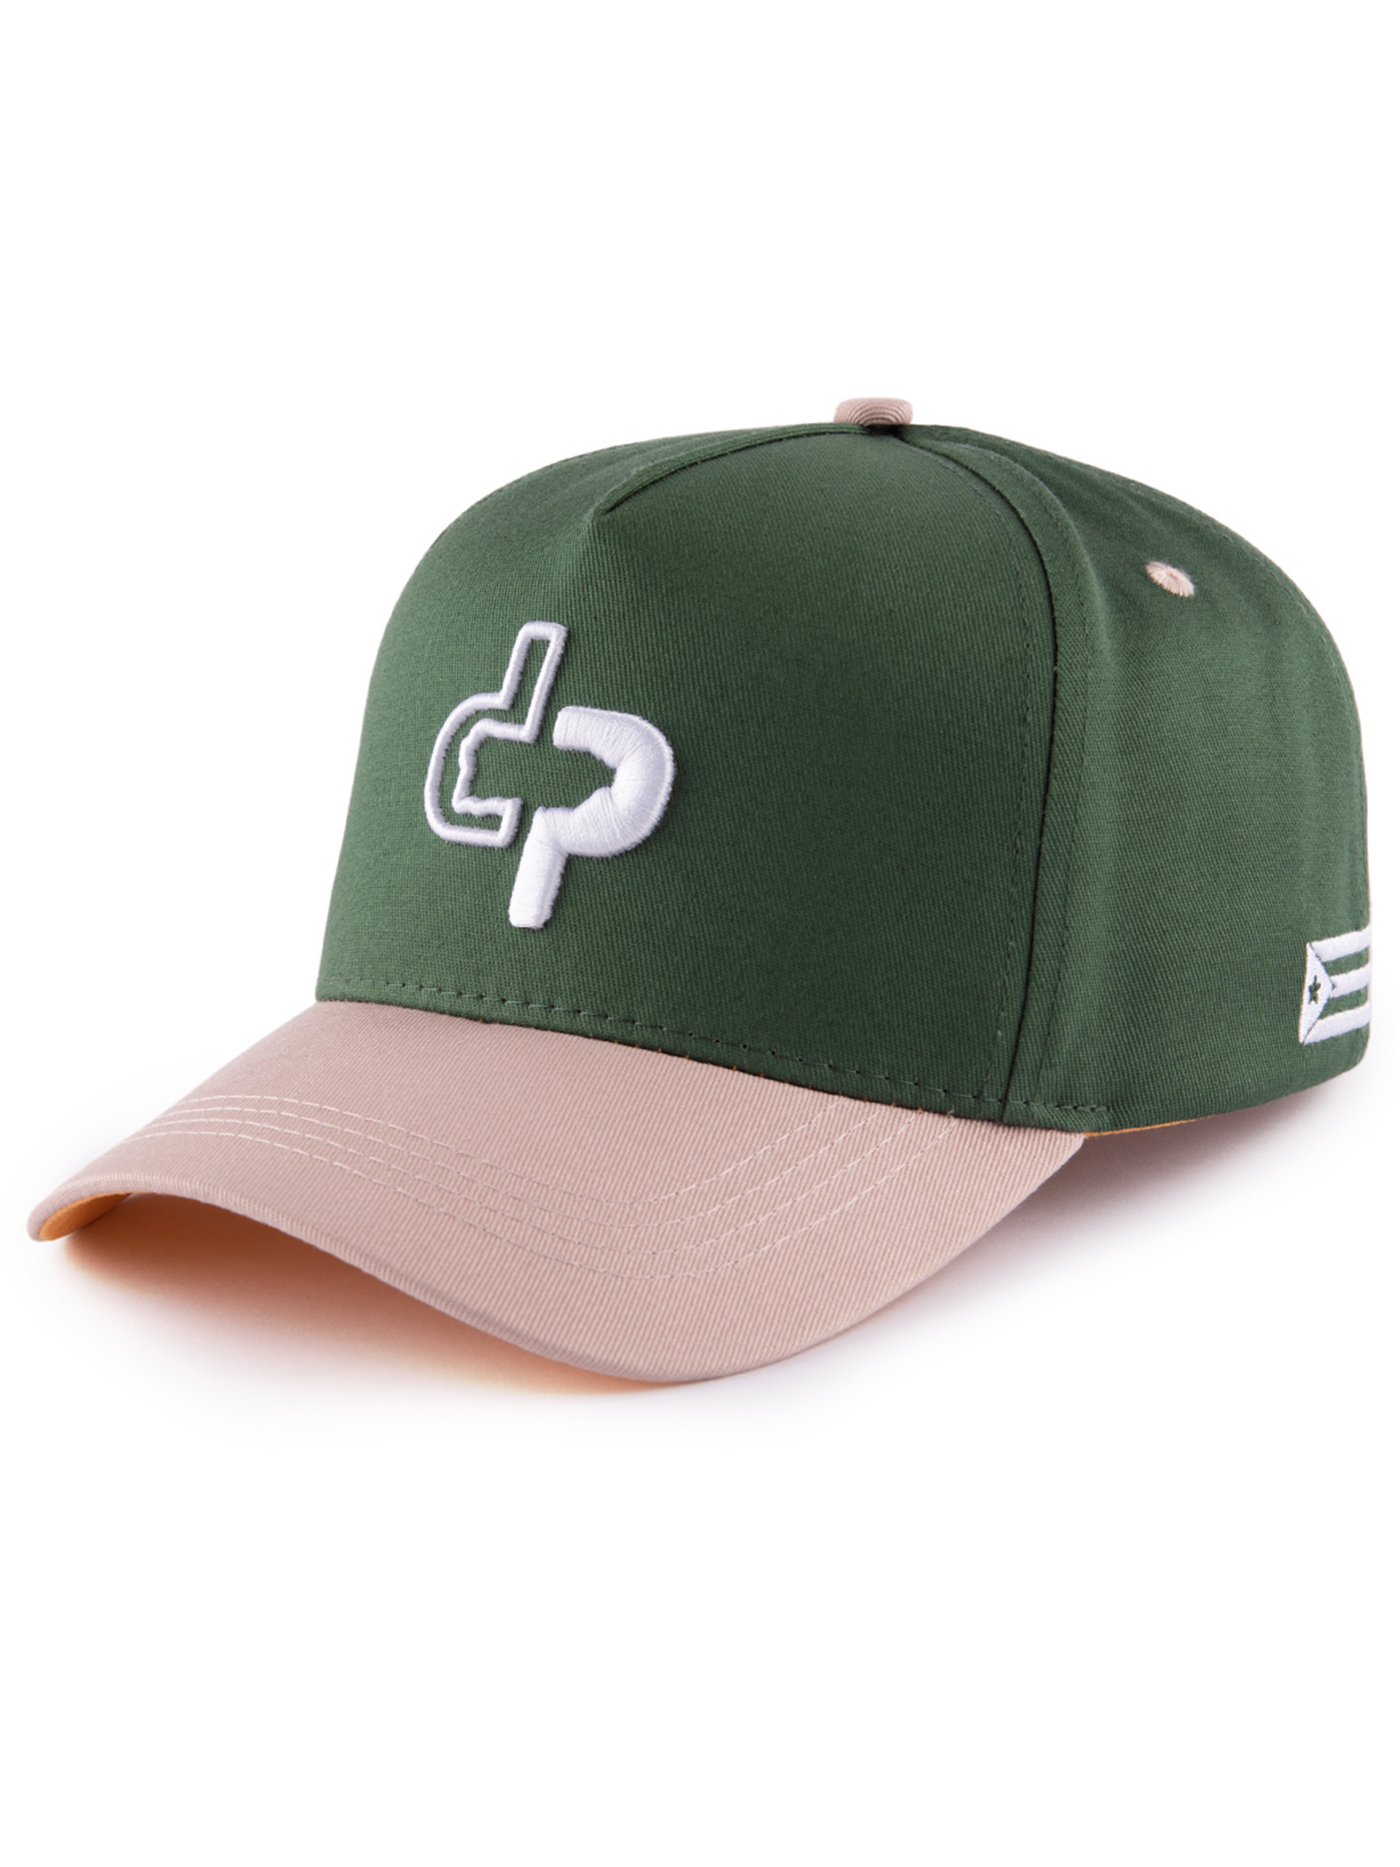 DP ICON - Baseball Cap - Cypress